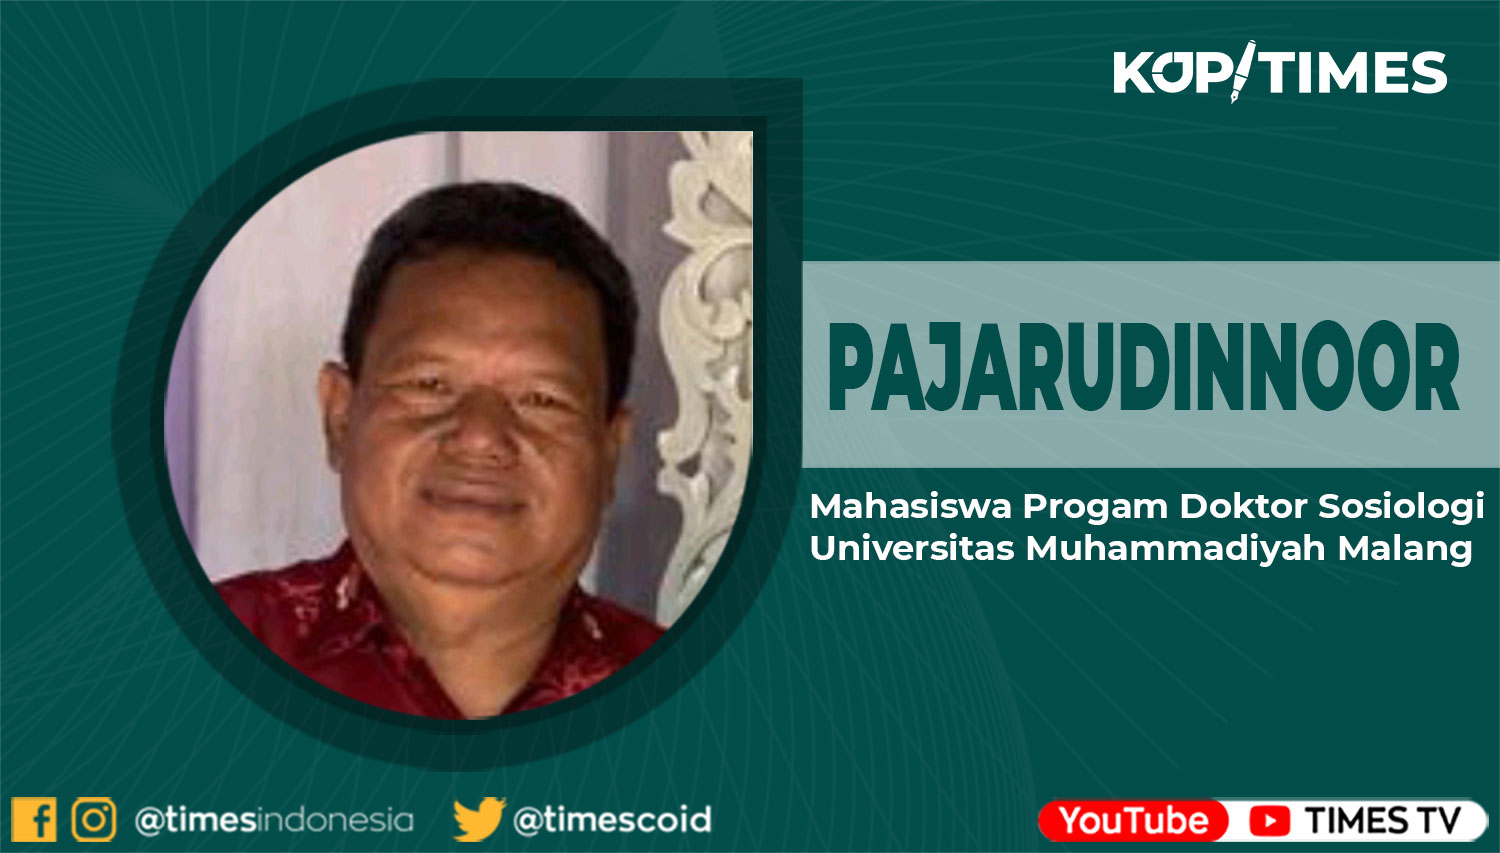 Pajarudinnoor, Mahasiswa Progam Doktor Sosiologi Universitas Muhammadiyah Malang.